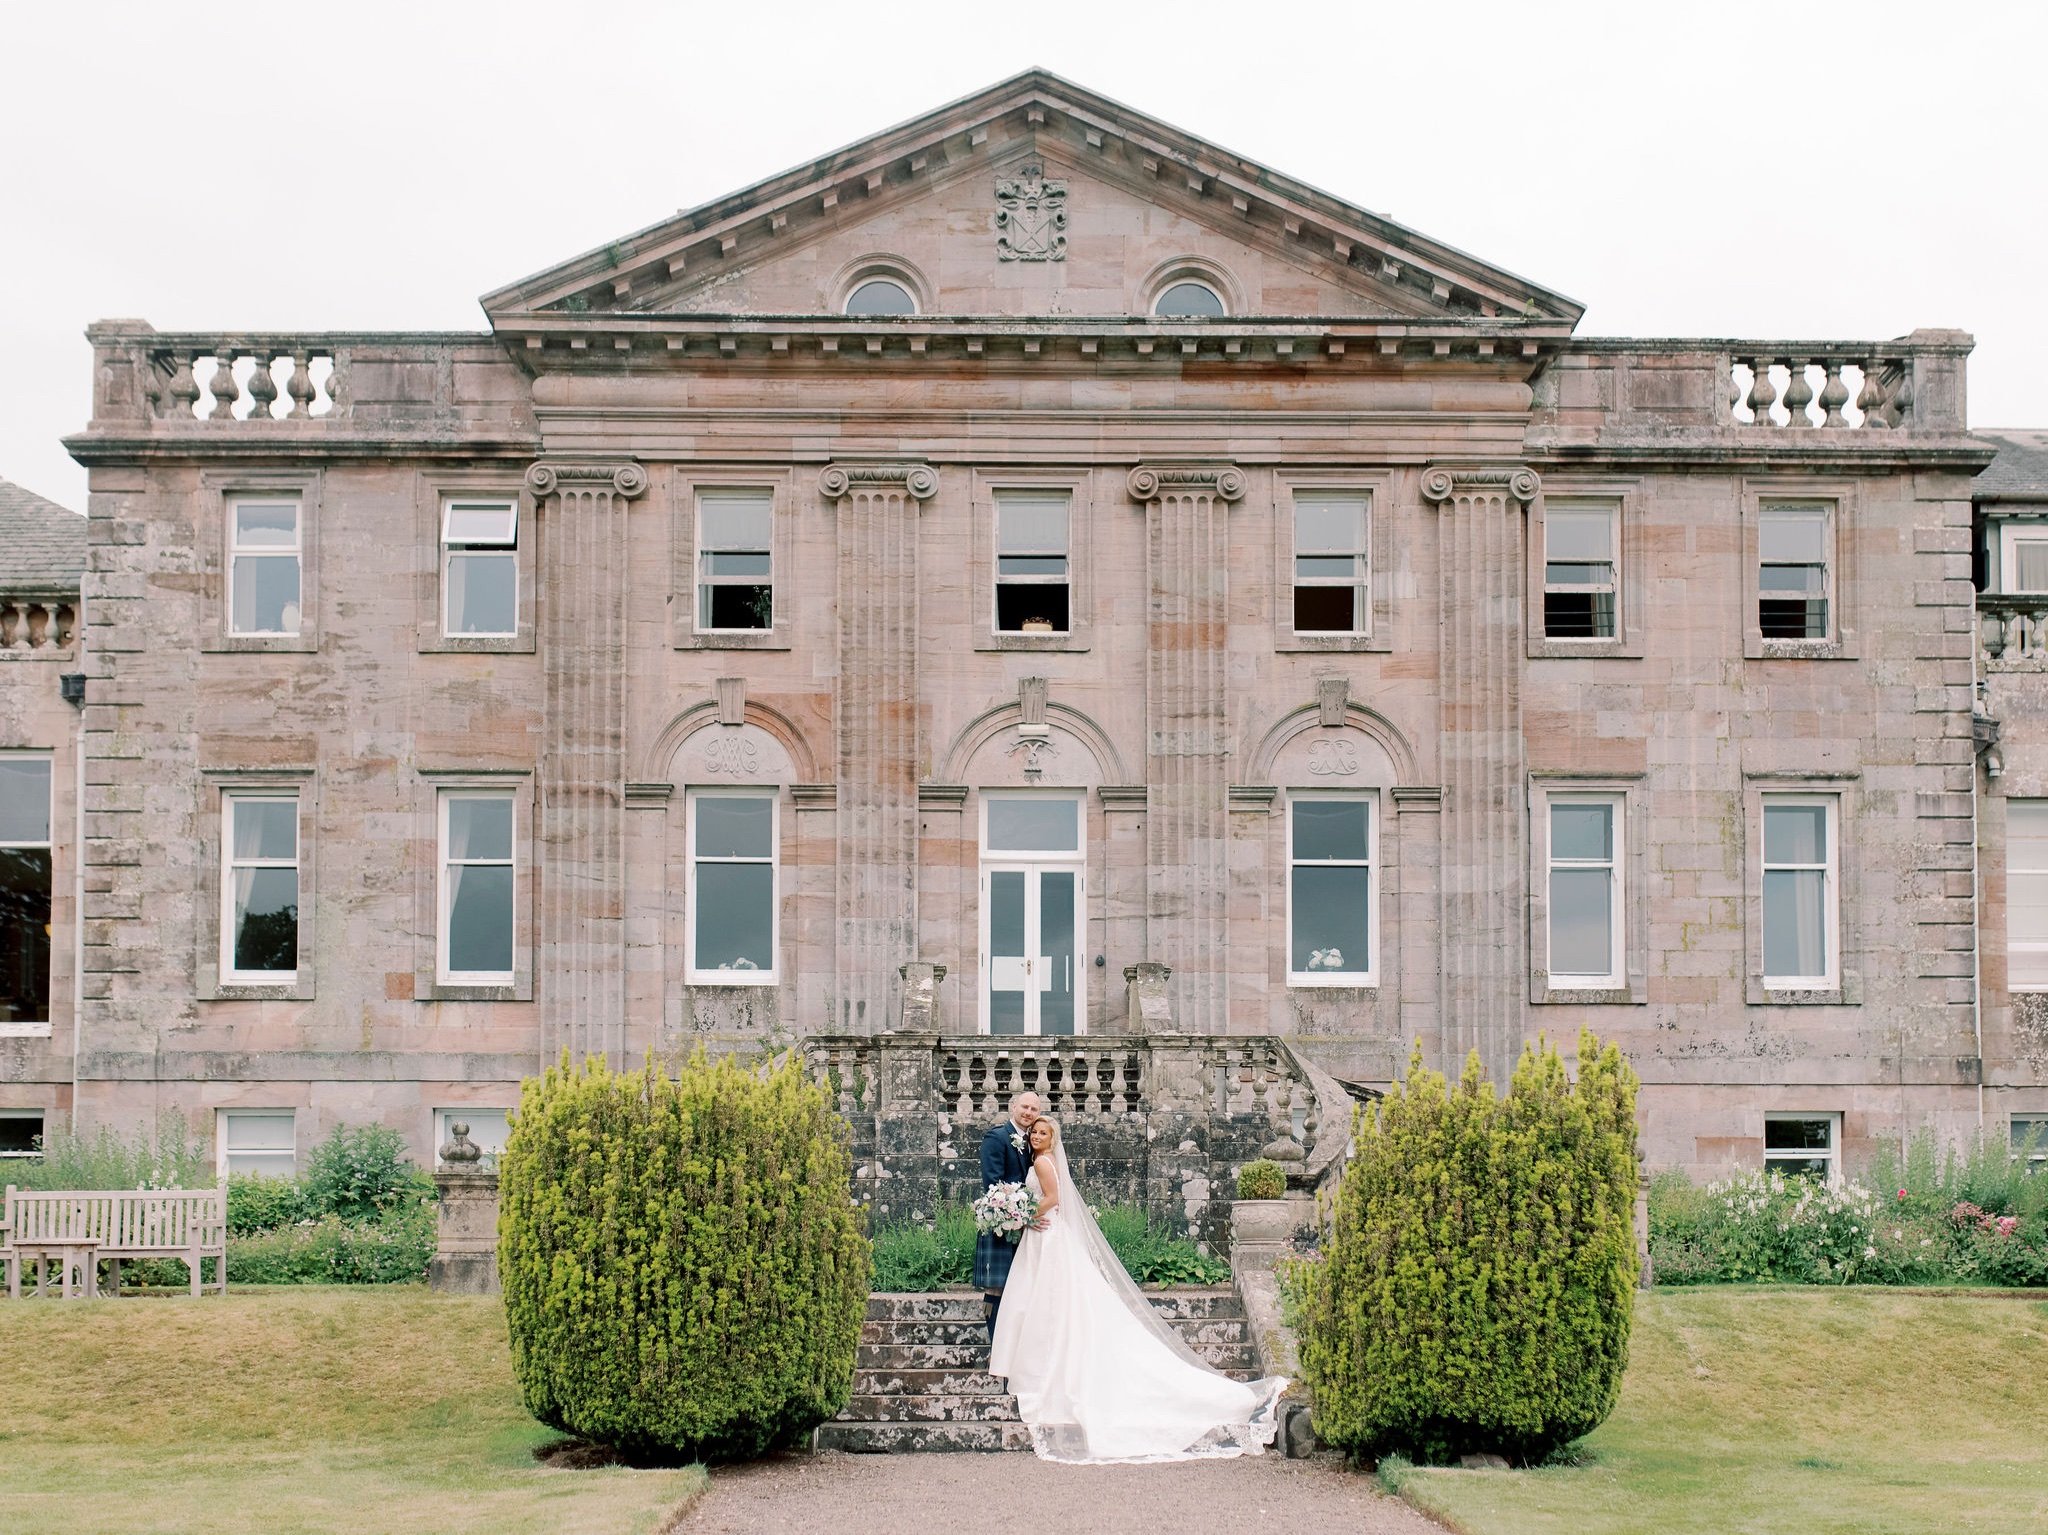 33_springkell-house-wedding-photographer-dumfries-scotland-portrait-on-steps.jpg